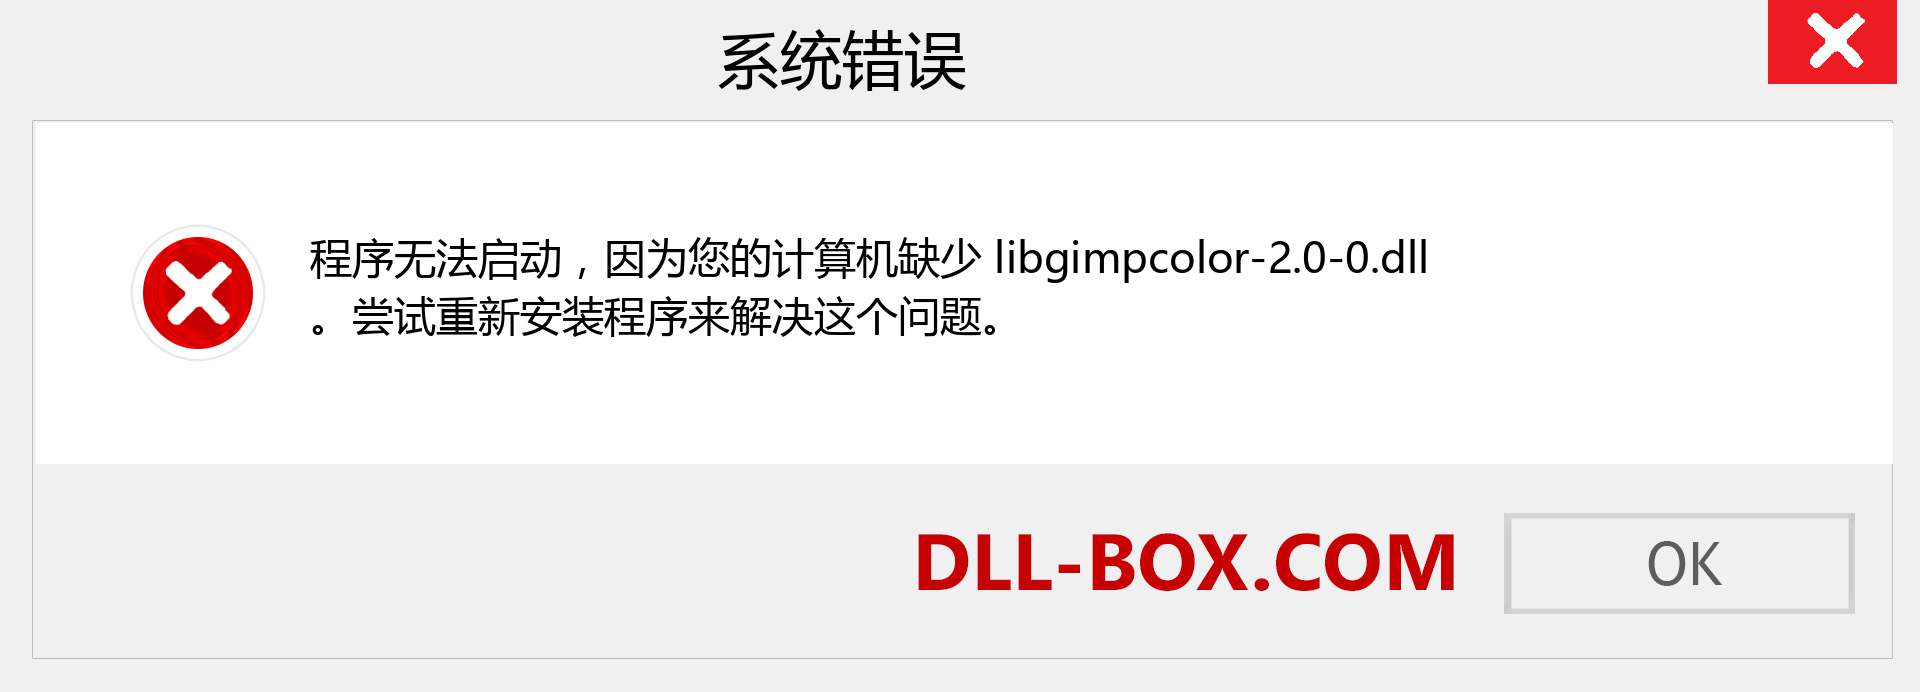 libgimpcolor-2.0-0.dll 文件丢失？。 适用于 Windows 7、8、10 的下载 - 修复 Windows、照片、图像上的 libgimpcolor-2.0-0 dll 丢失错误